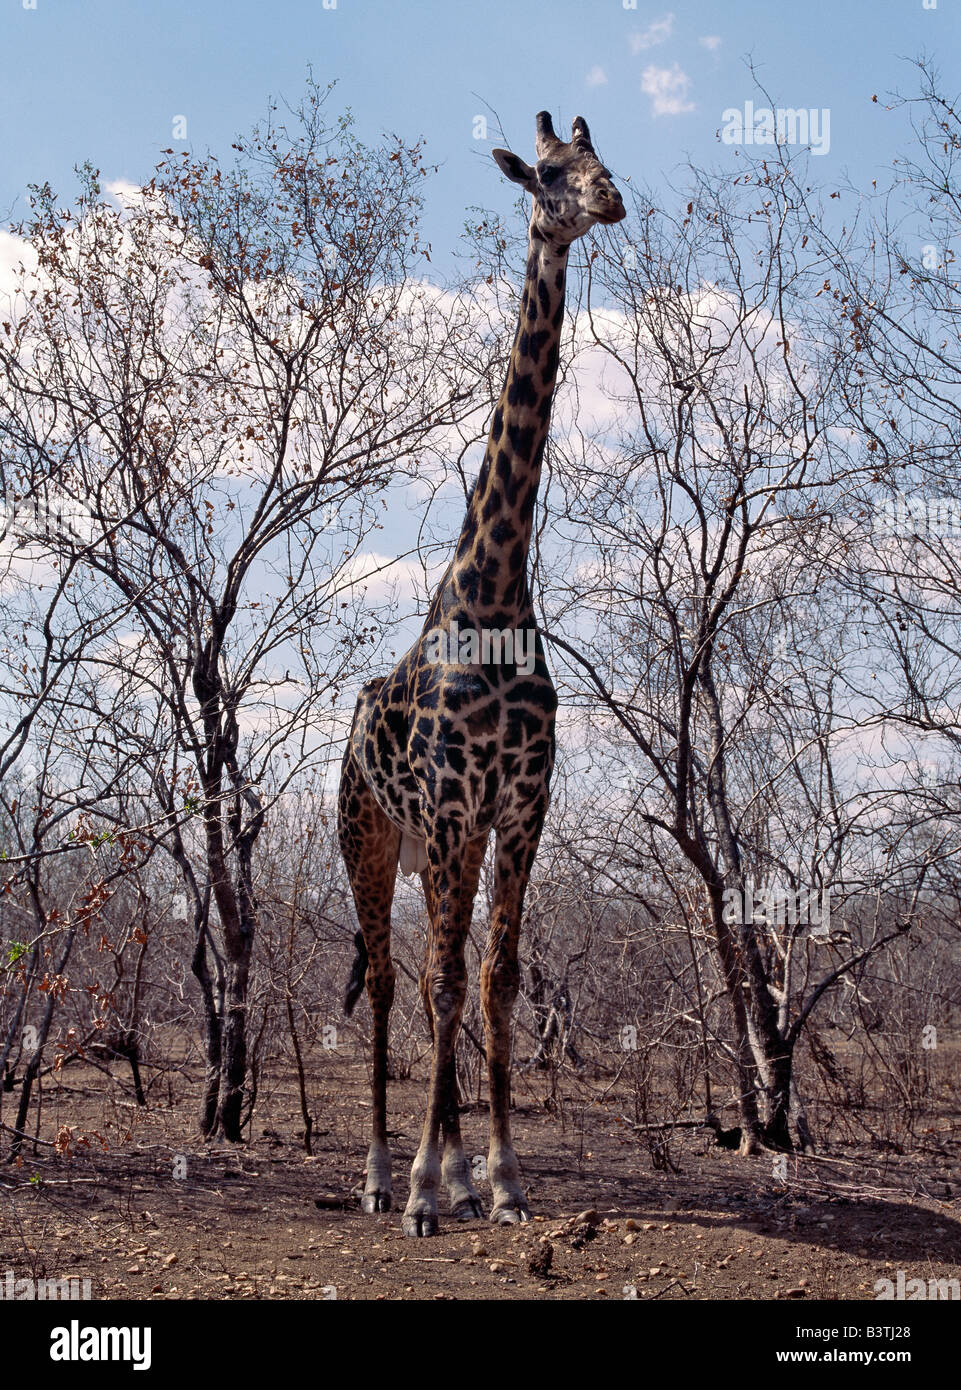 Tanzania, Southern Tanzania, An old Masai giraffe with very dark markings in the Ruaha National Park of Southern Tanzania. Stock Photo